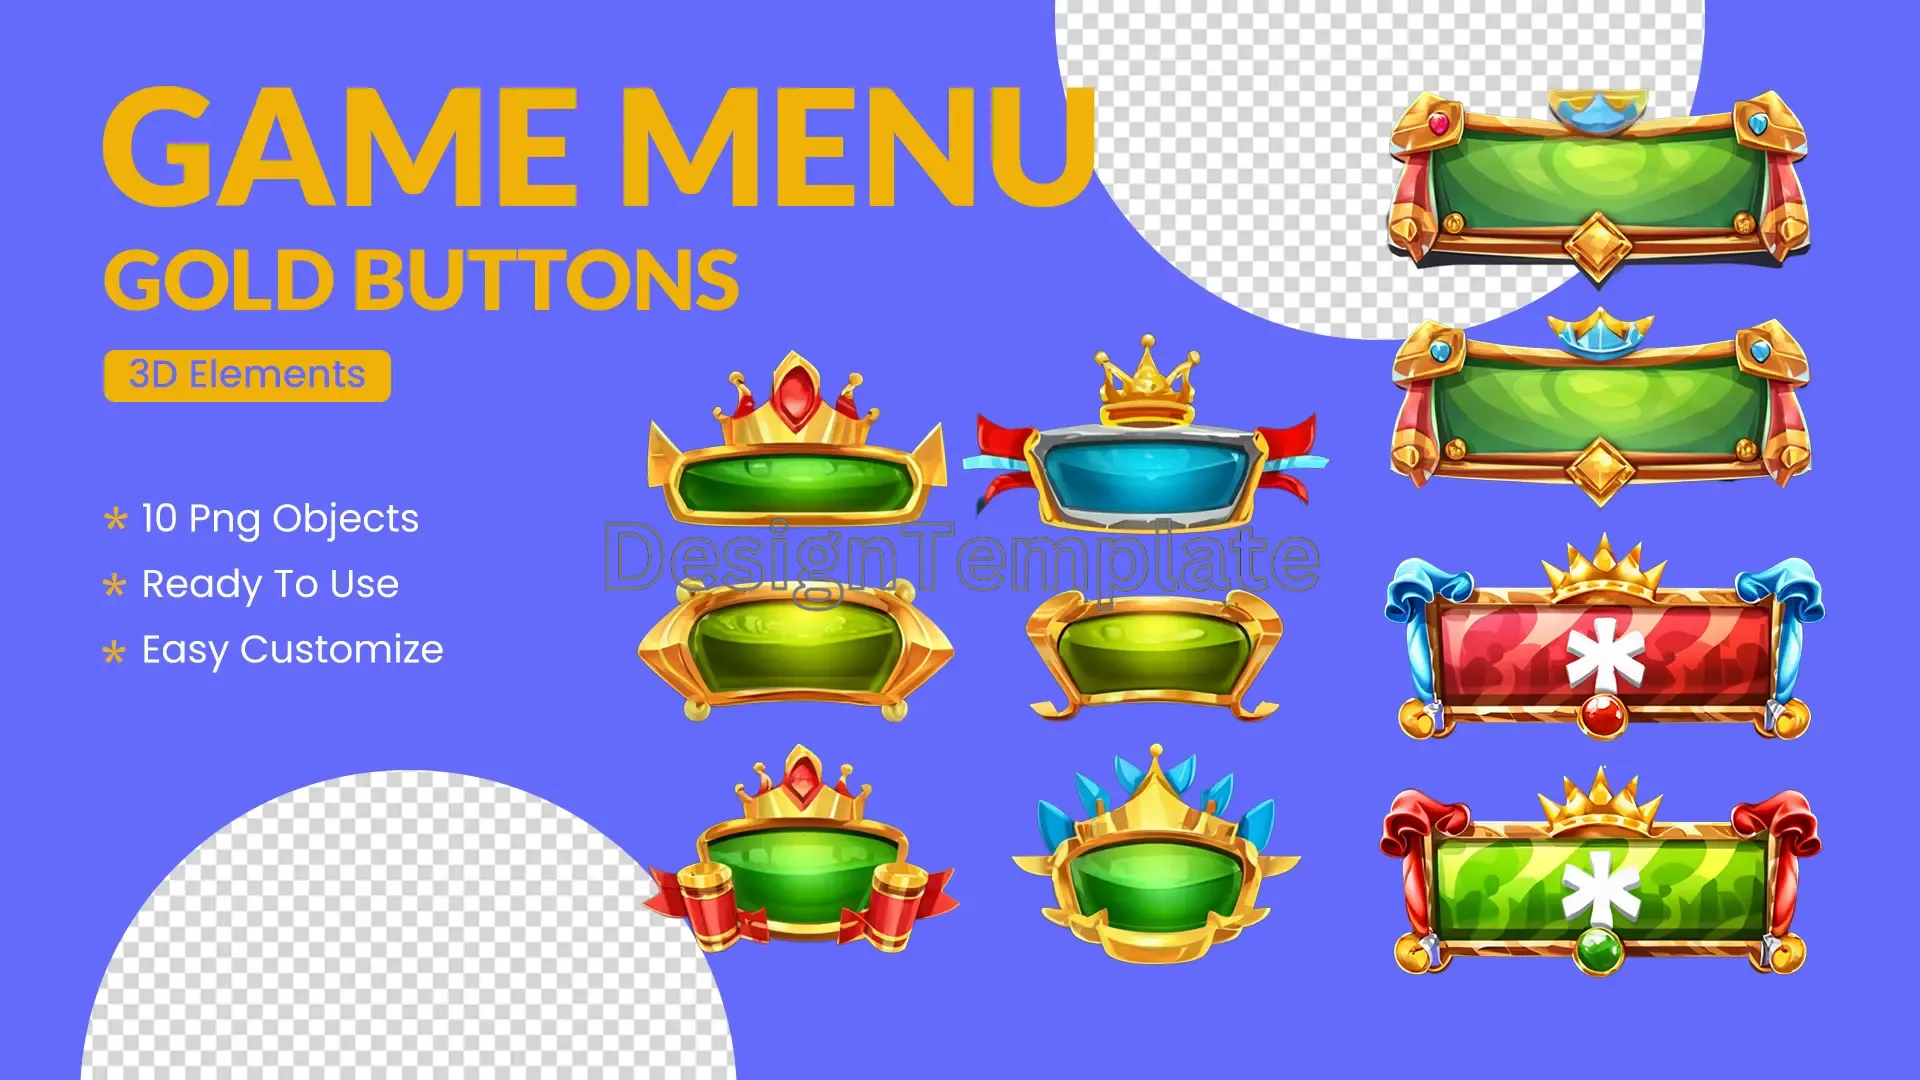 Golden Interface Luxurious 3D Game Menu Buttons Pack image